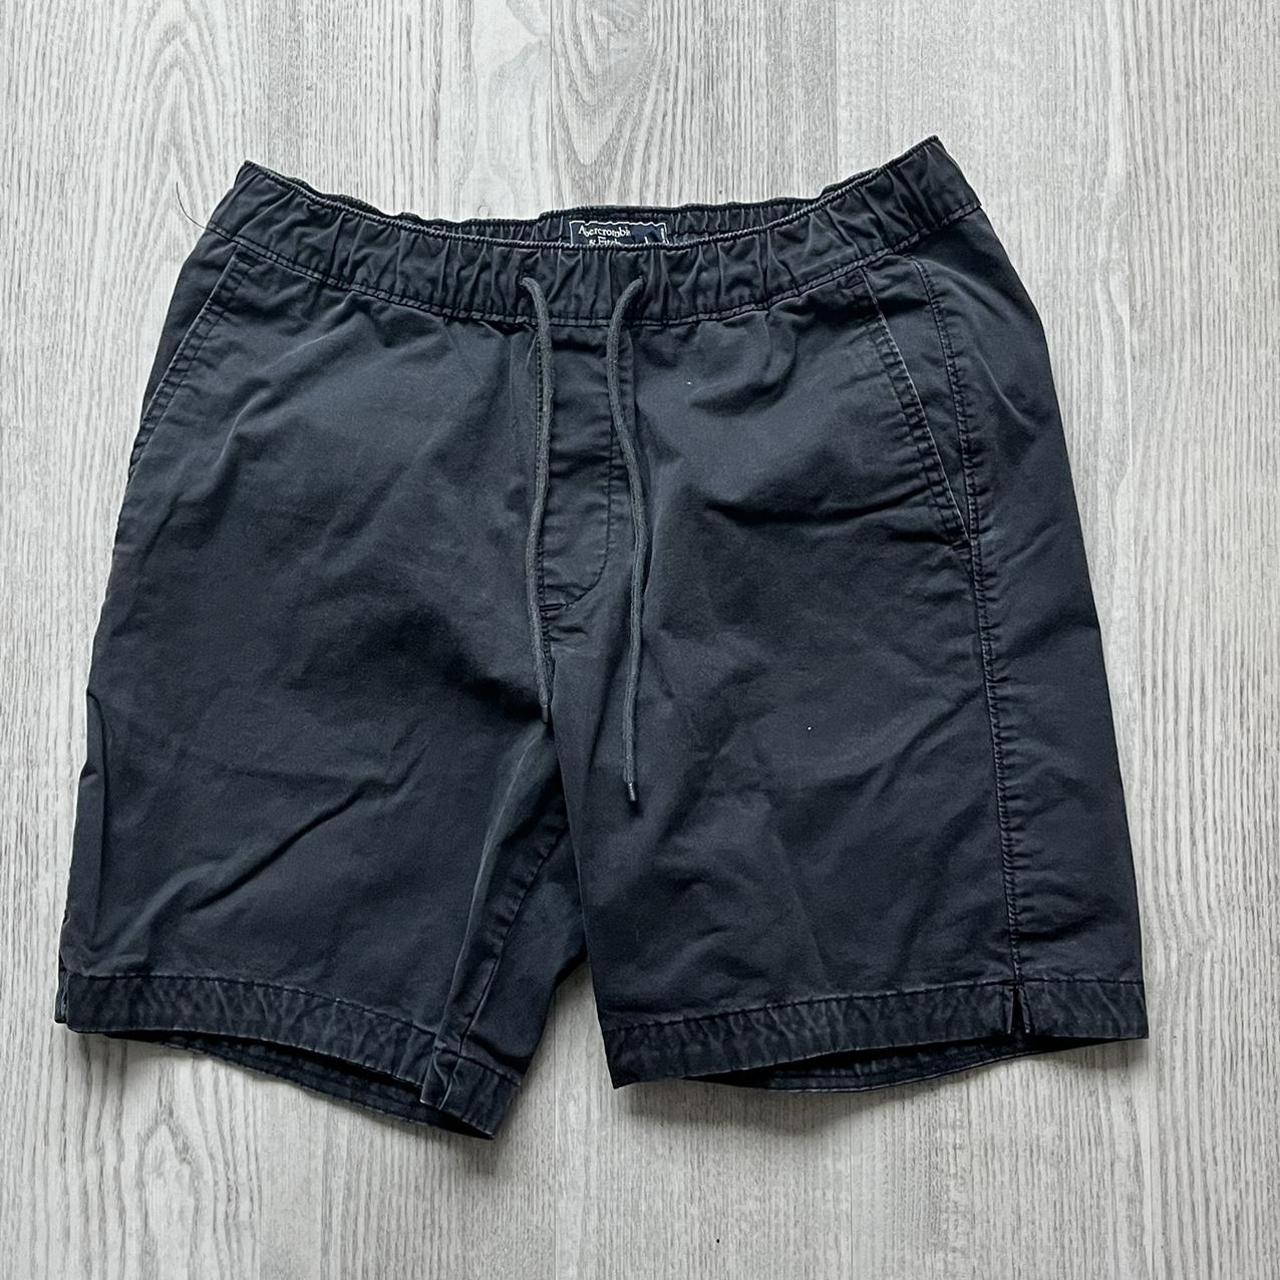 Abercrombie & Fitch Men's Navy Shorts | Depop